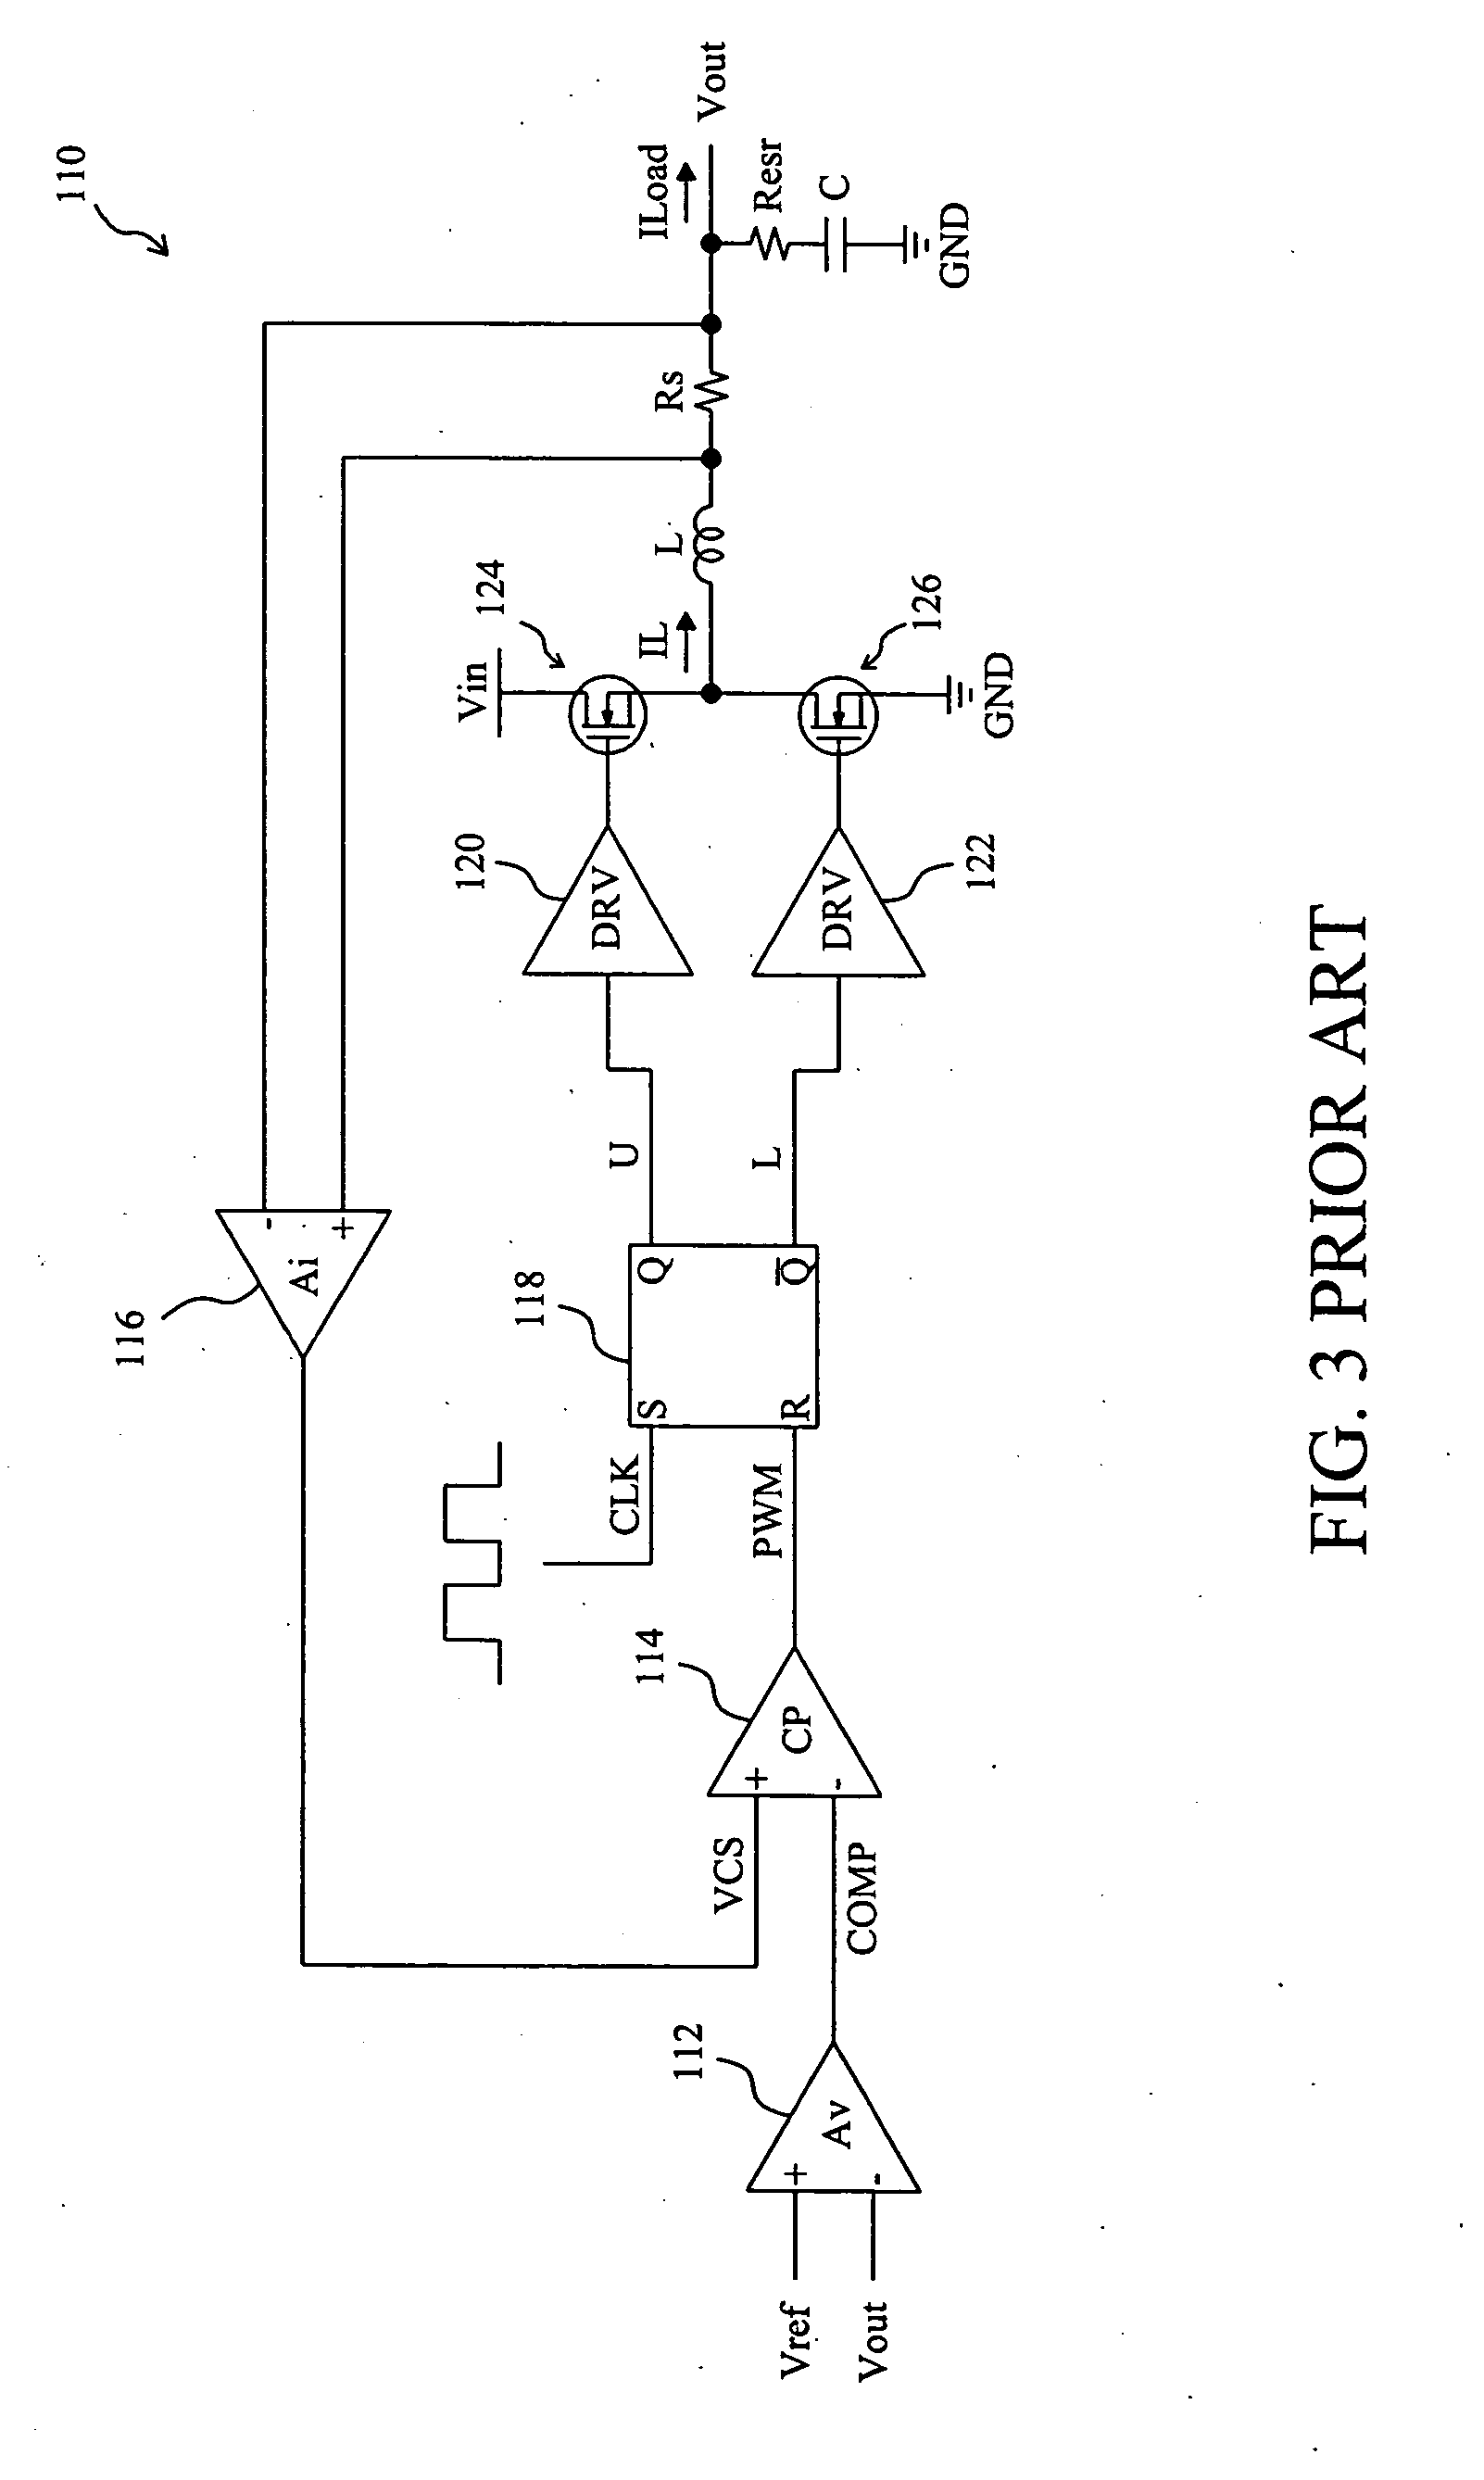 Low-gain current-mode voltage regulator